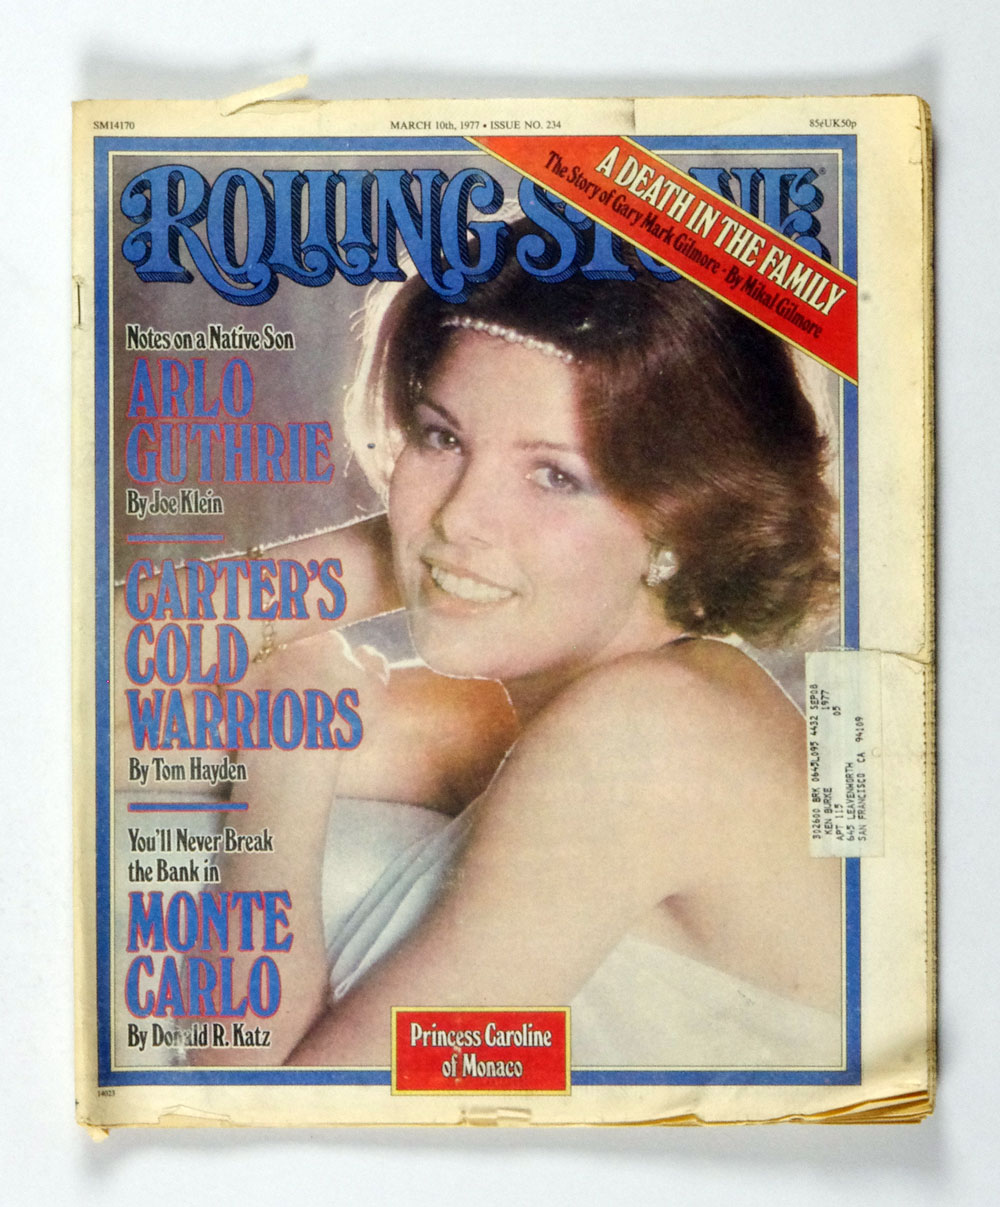 Rolling Stone Magazine Back Issue 1977 Mar 10 No. 234 Princess Caroline 